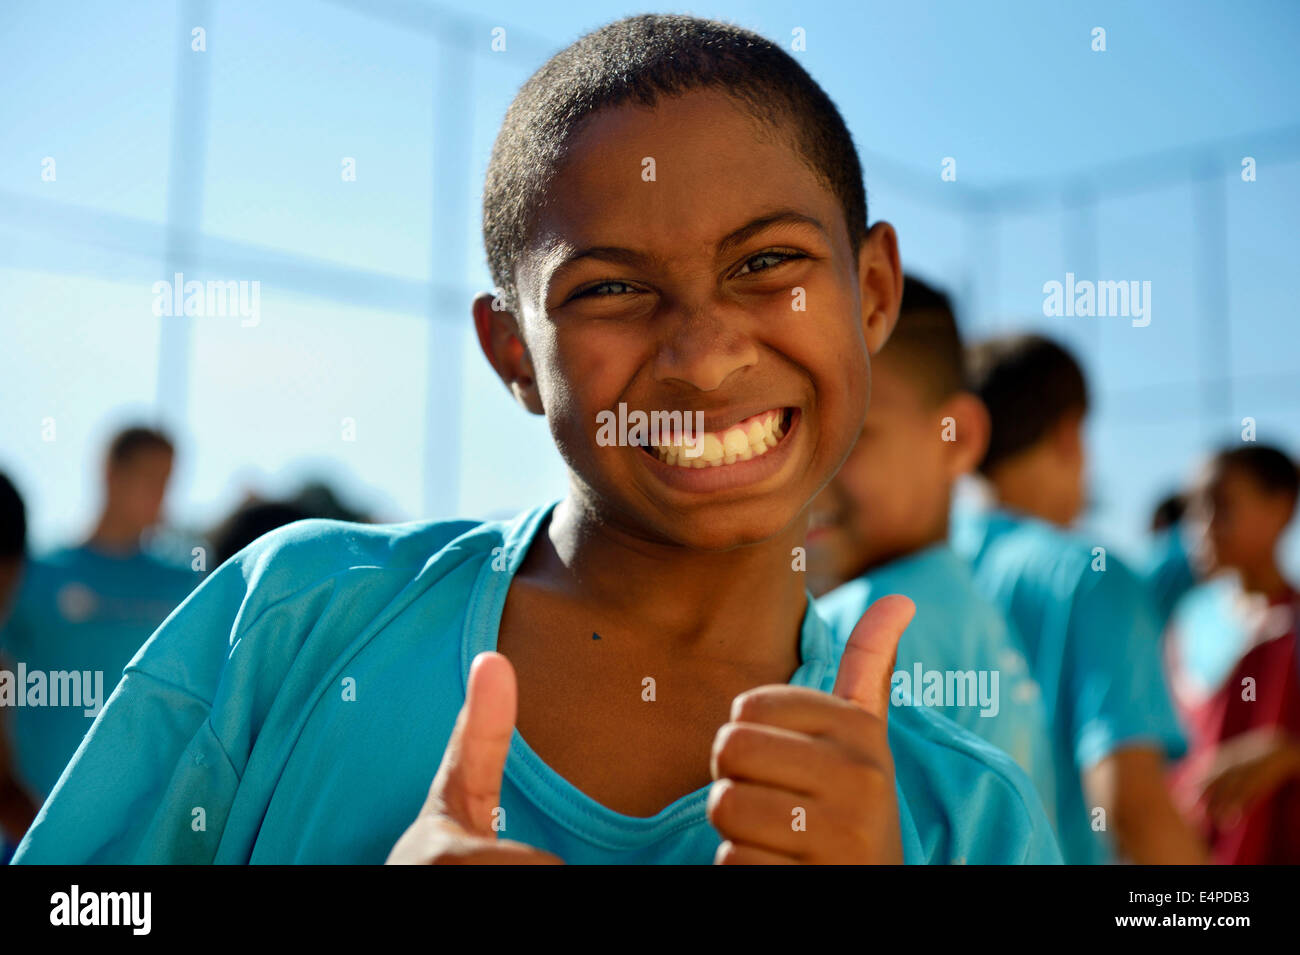 Junge macht Daumen hoch Geste, Guararape Favela, Rio De Janeiro, Brasilien Stockfoto